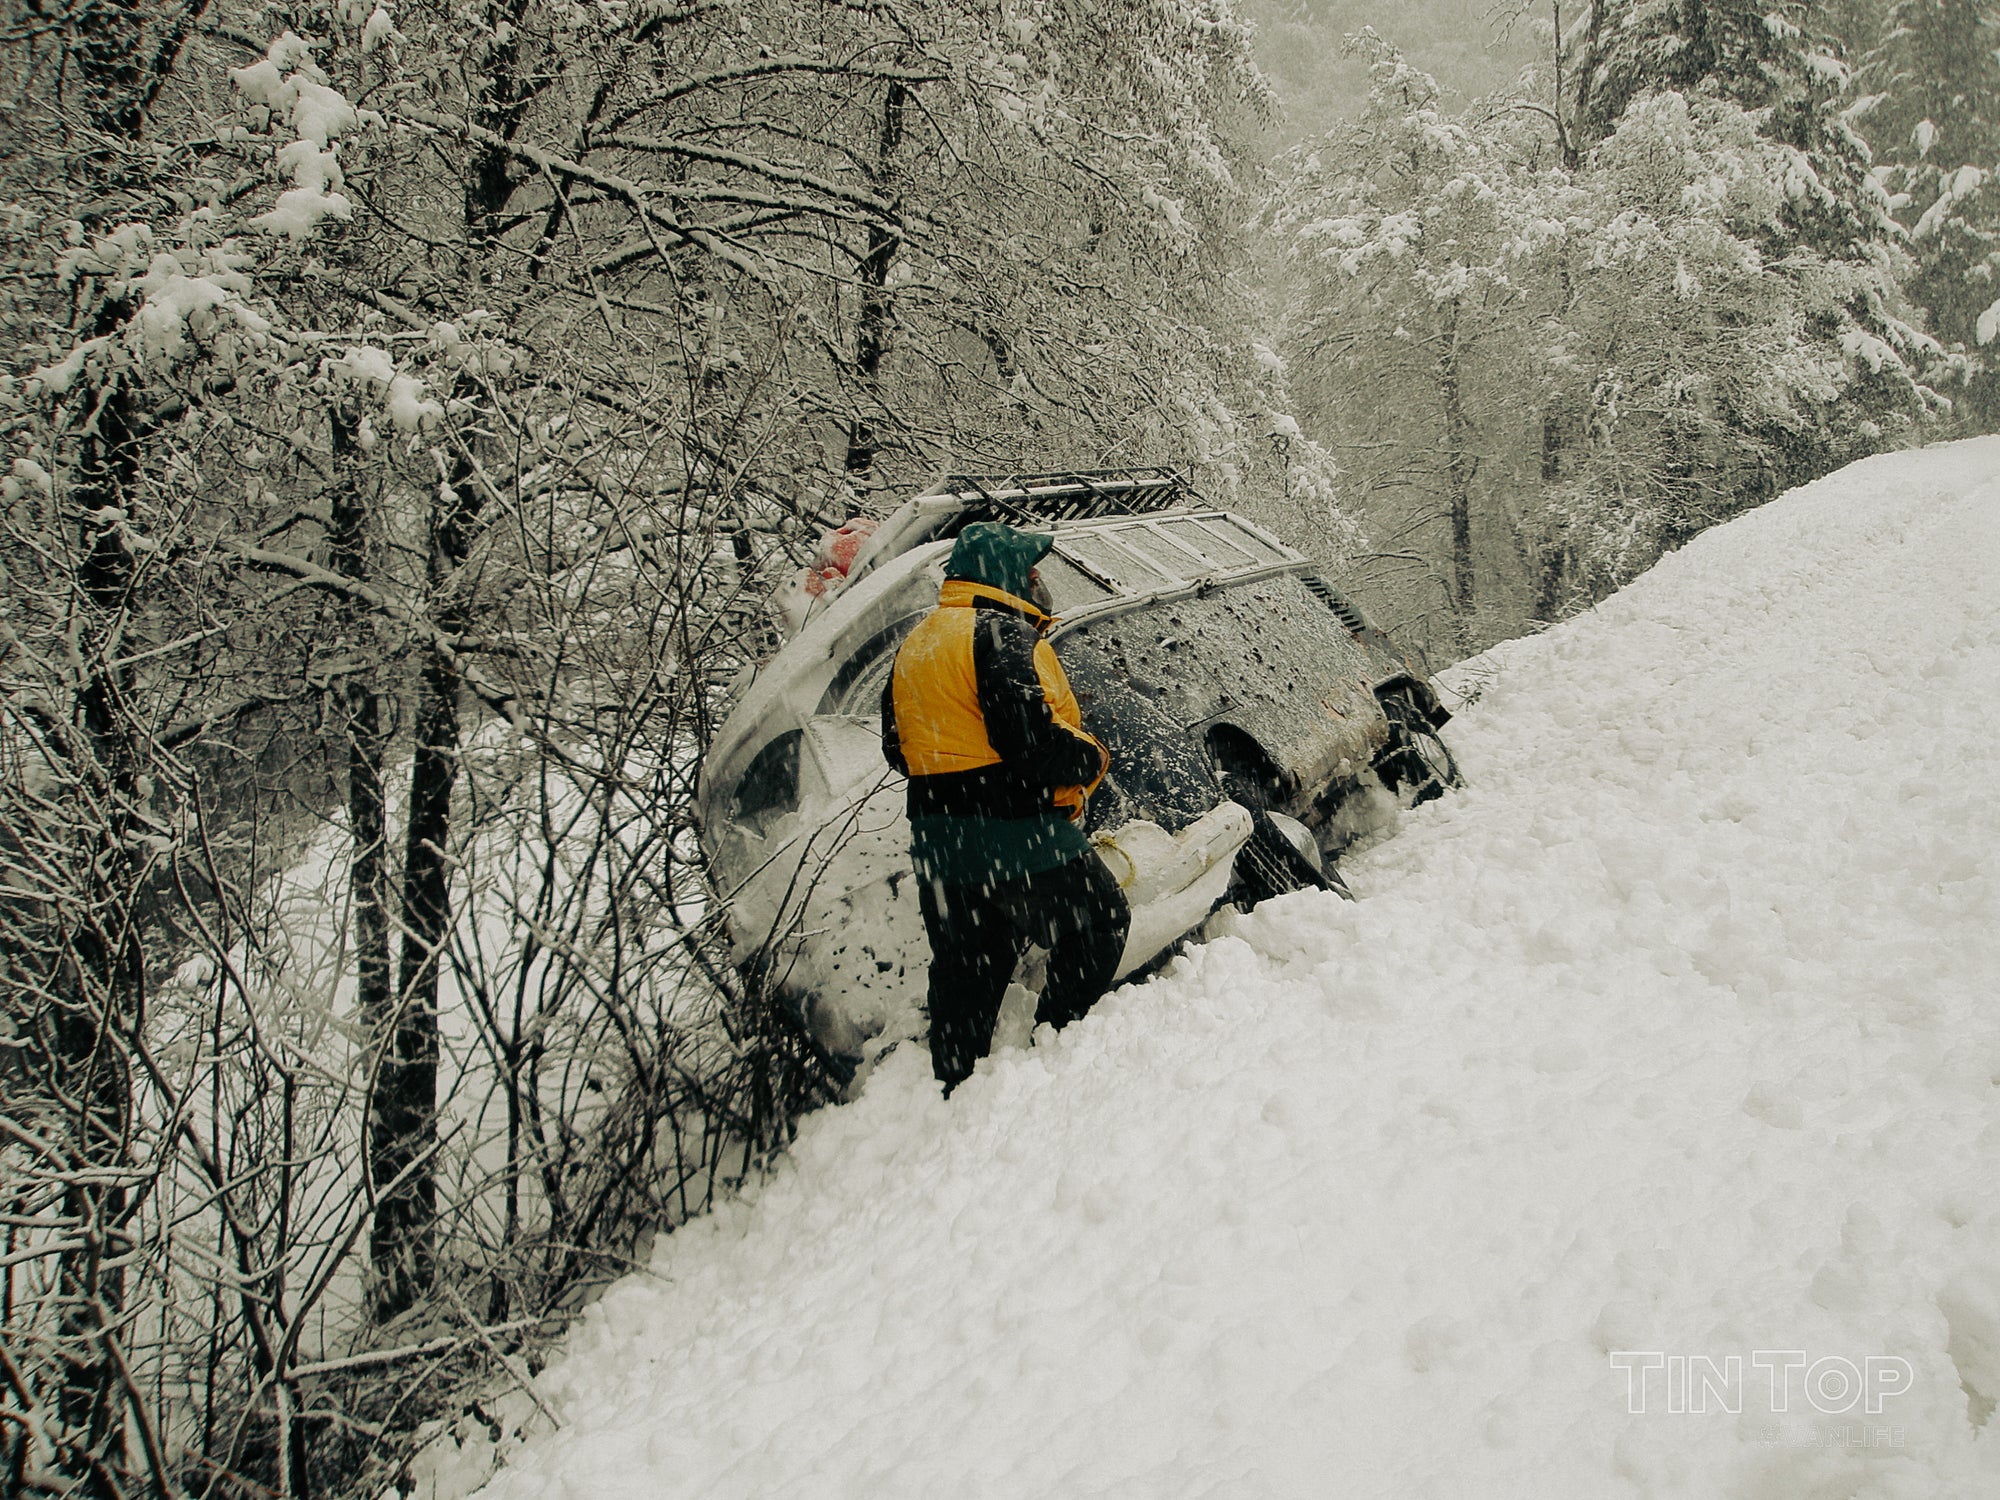 Shasta Snow Trip - Man & Van vs Mountain